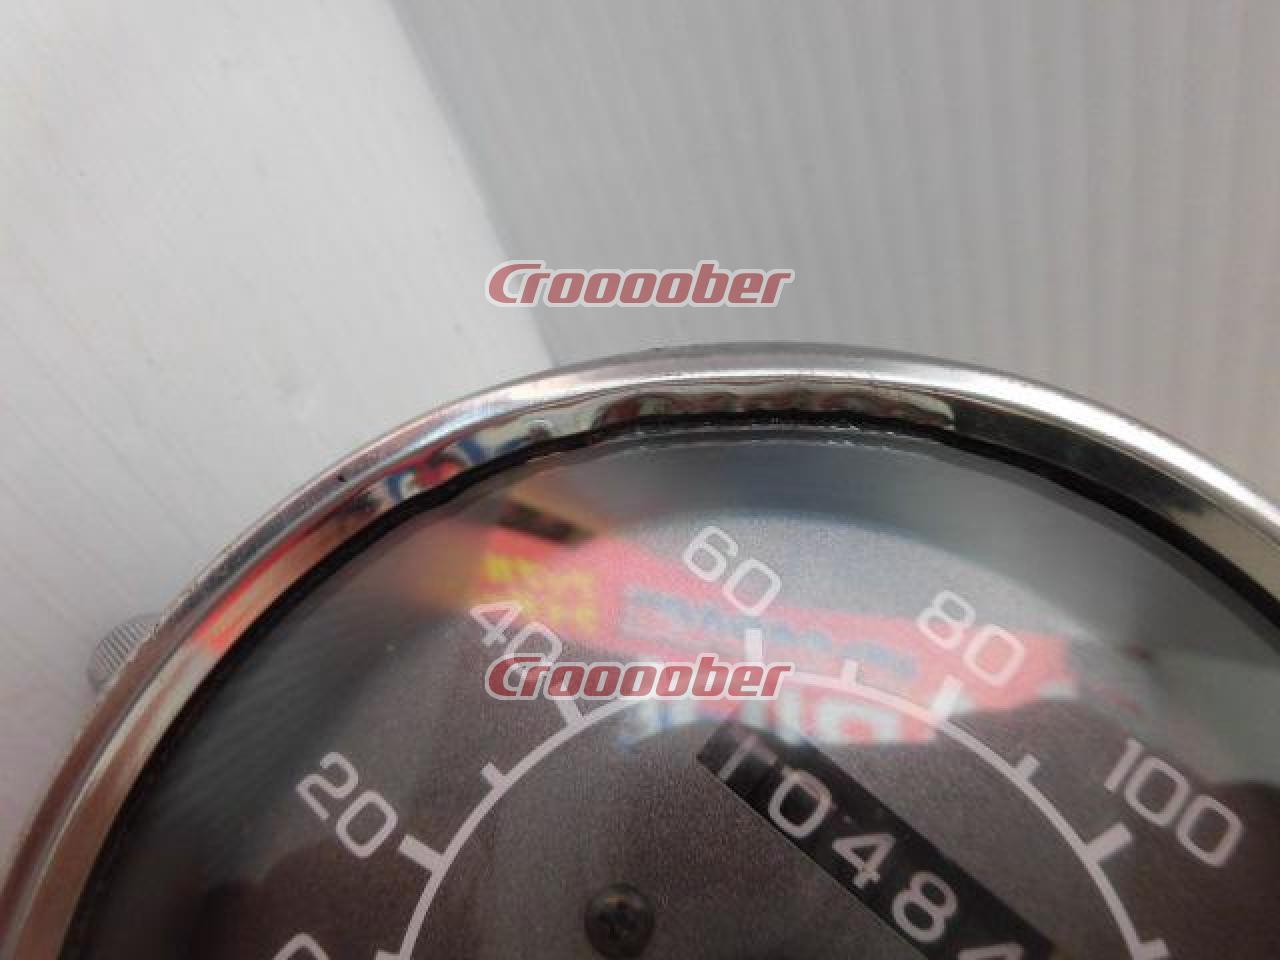 HONDA(ホンダ) スティード400純正スピードメーター メーター スピードメーター(二輪)パーツの通販なら Croooober(クルーバー)